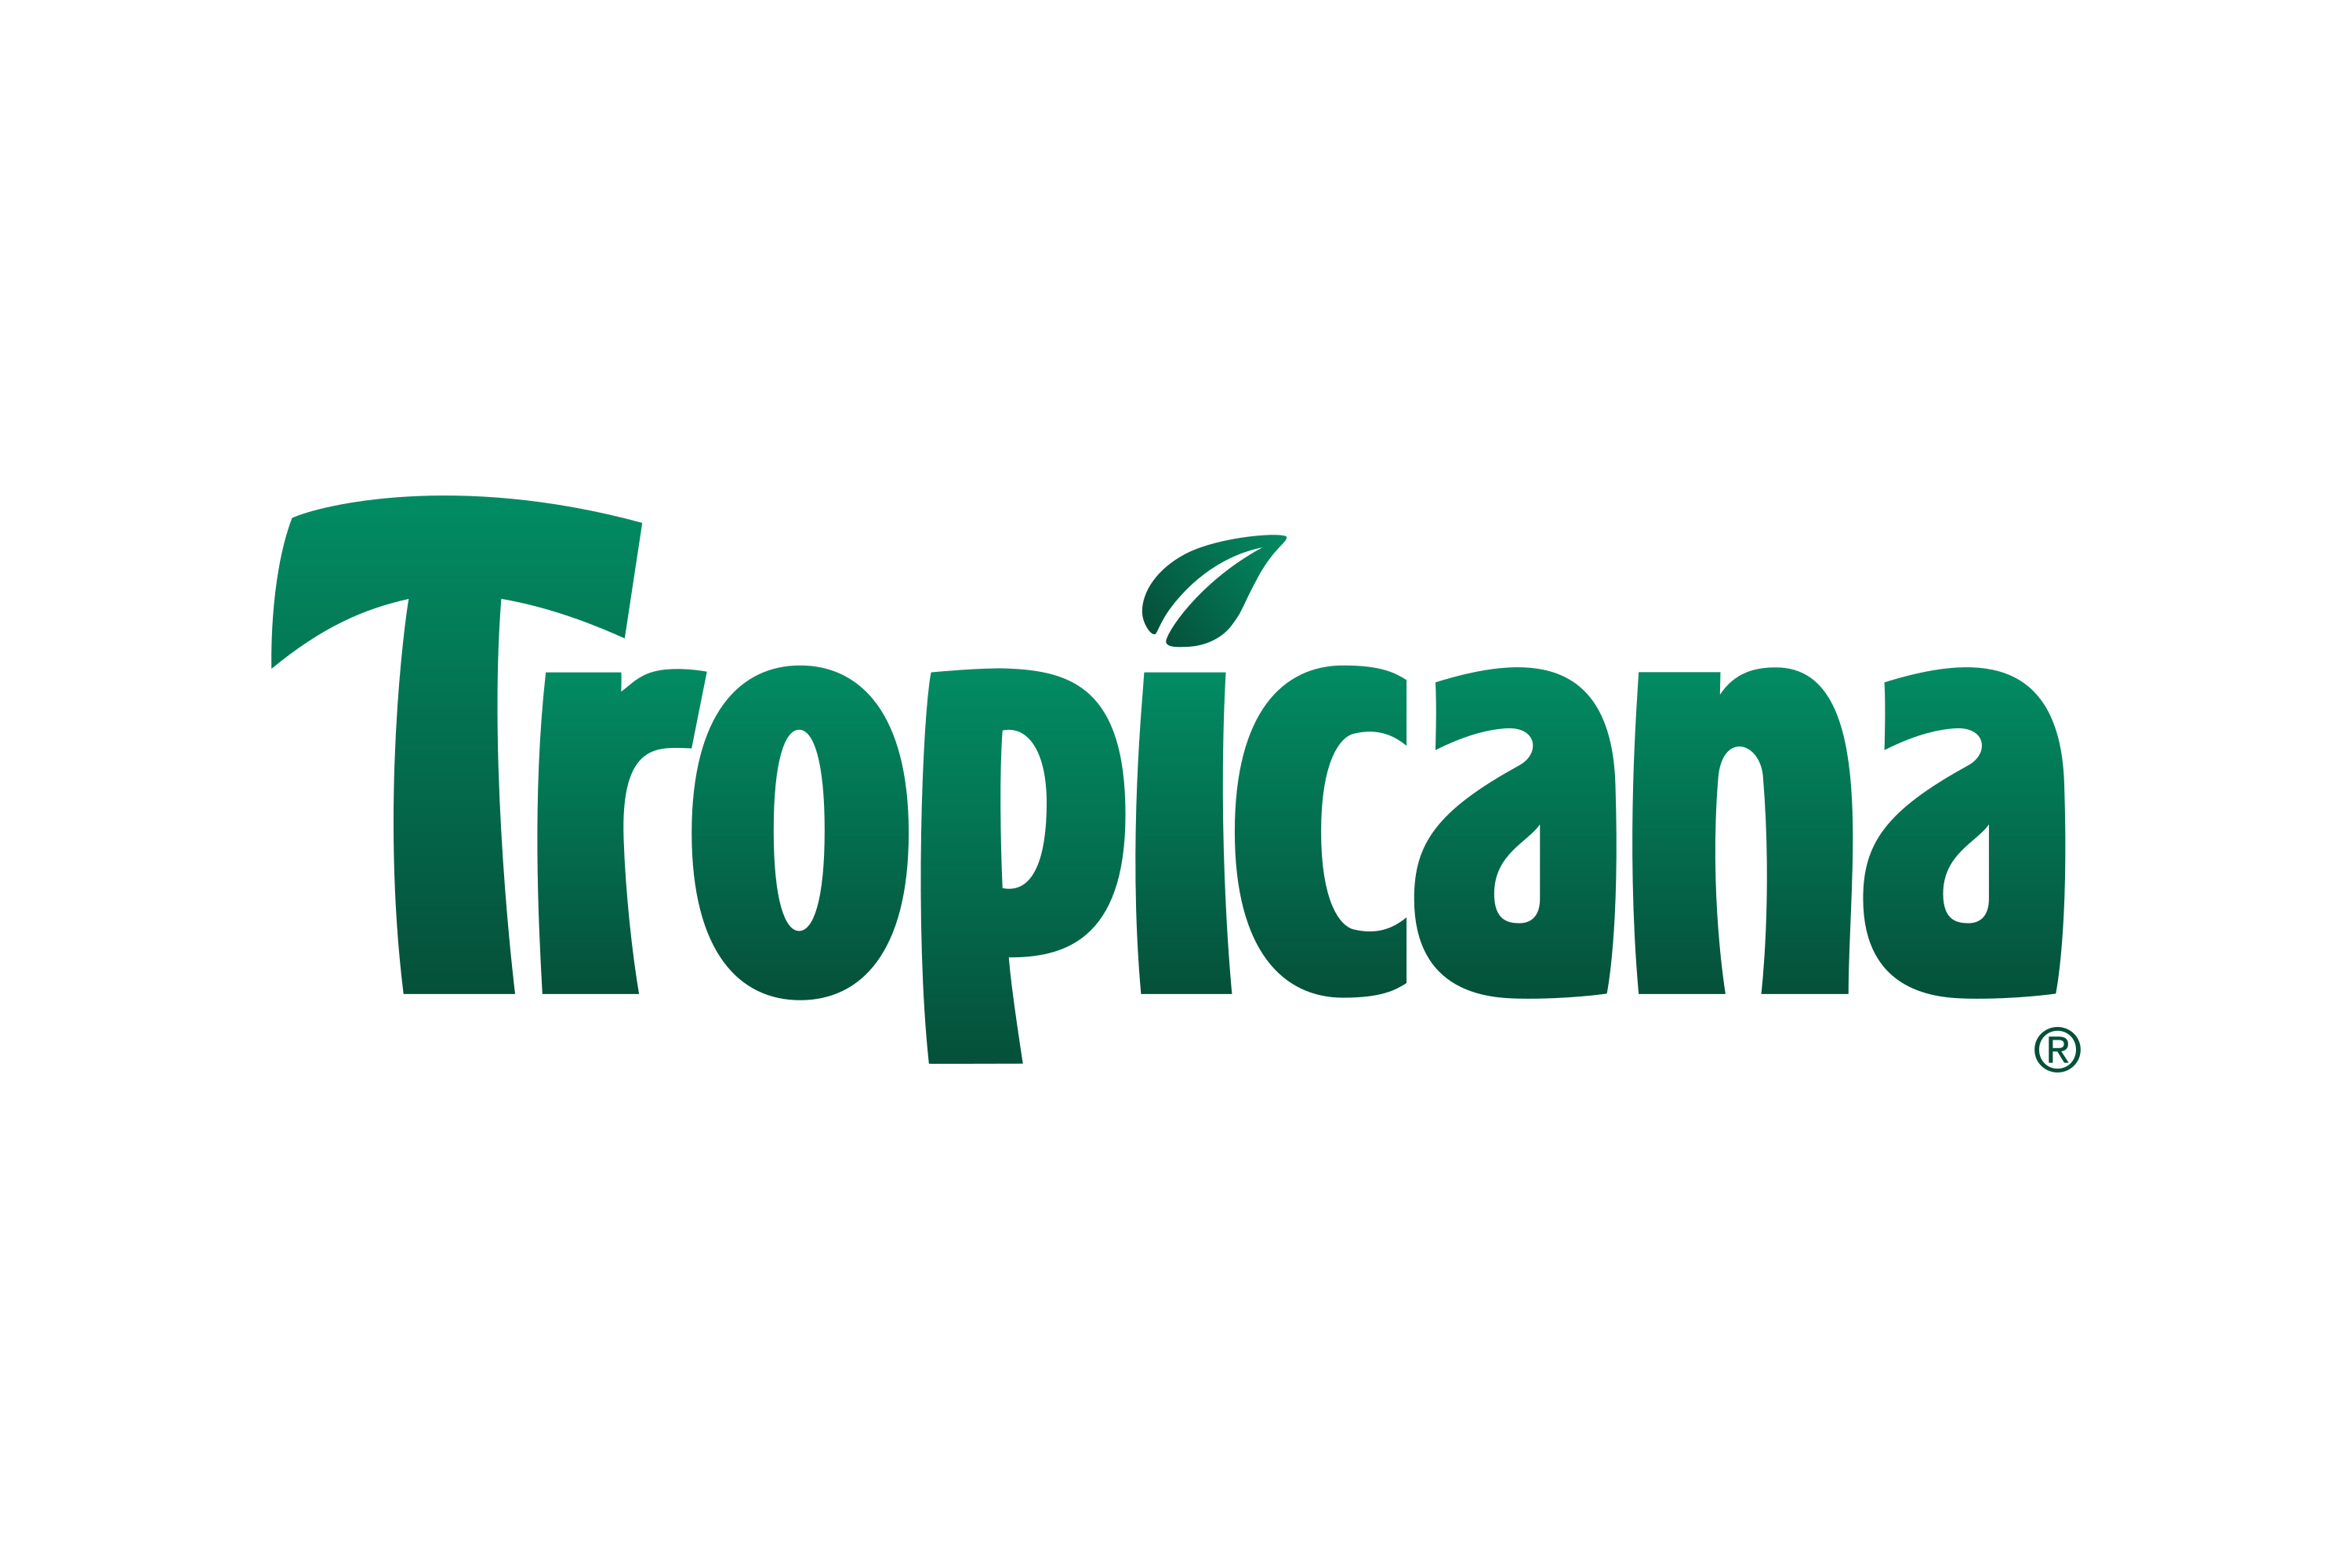 Tropicana Products Logo